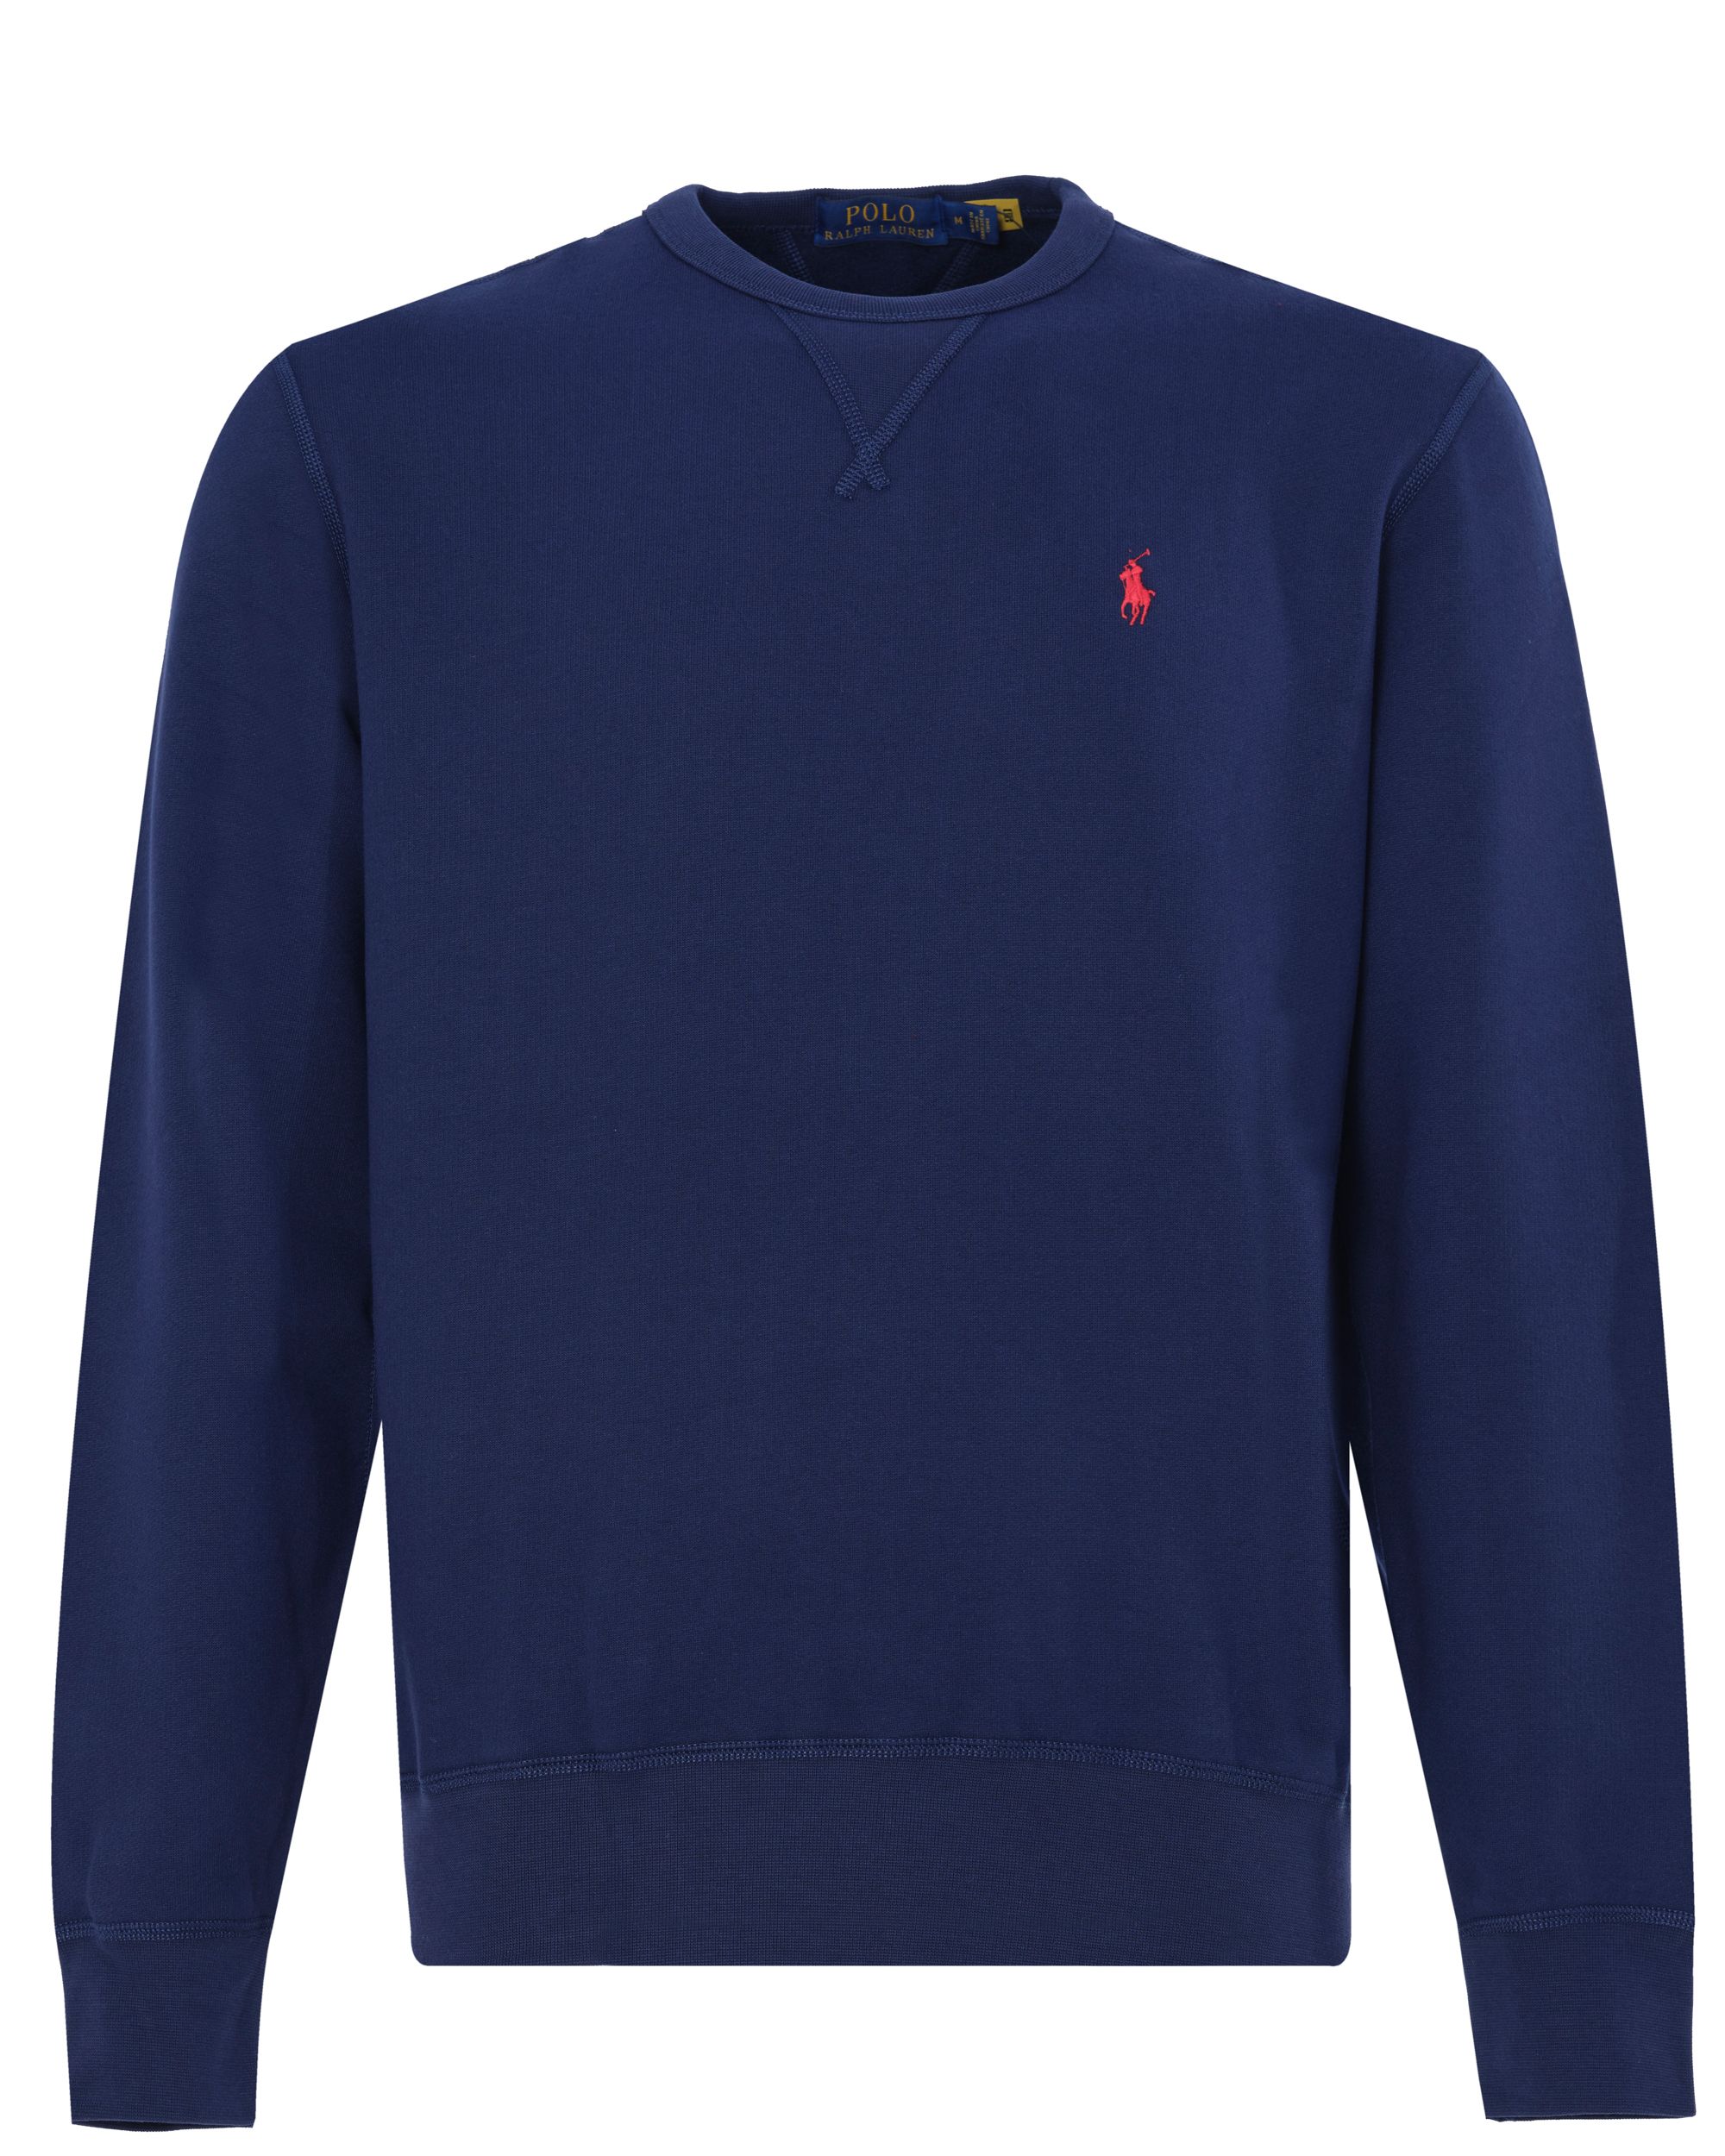 Polo Ralph Lauren - Sweater Donker blauw 080565-001-L